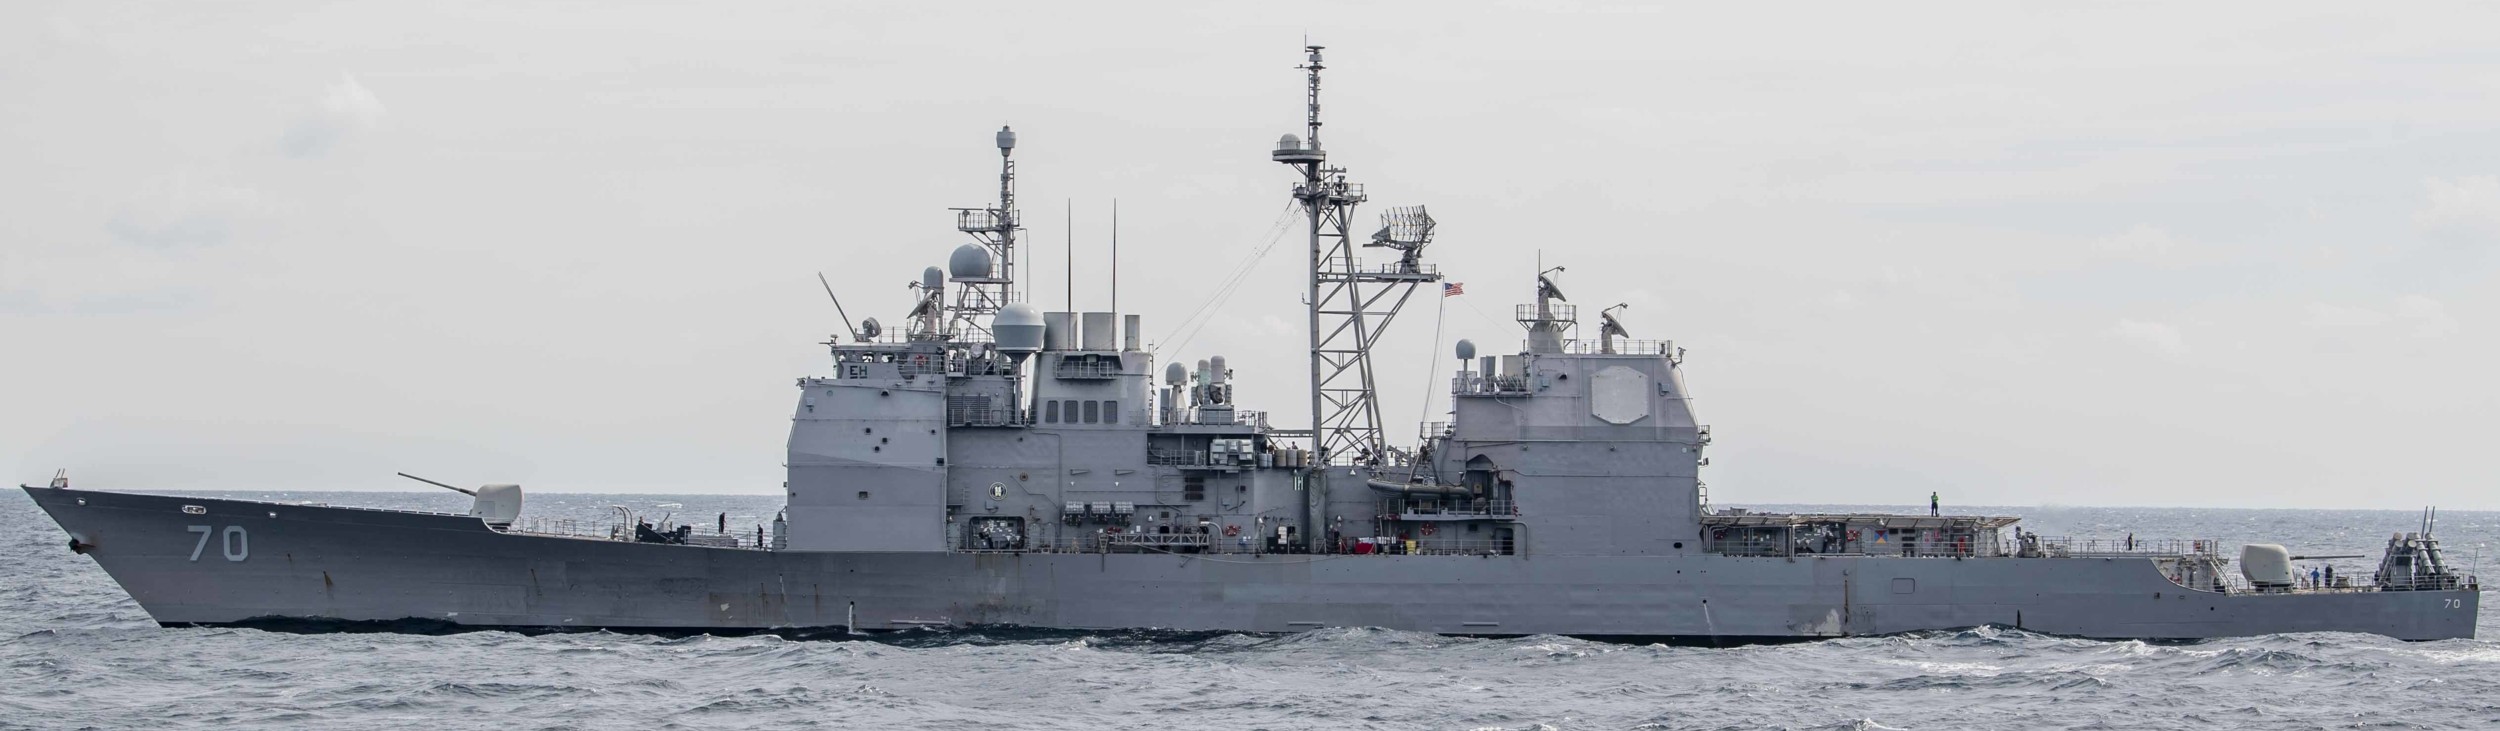 cg-70 uss lake erie ticonderoga class guided missile cruiser us navy east china sea 126